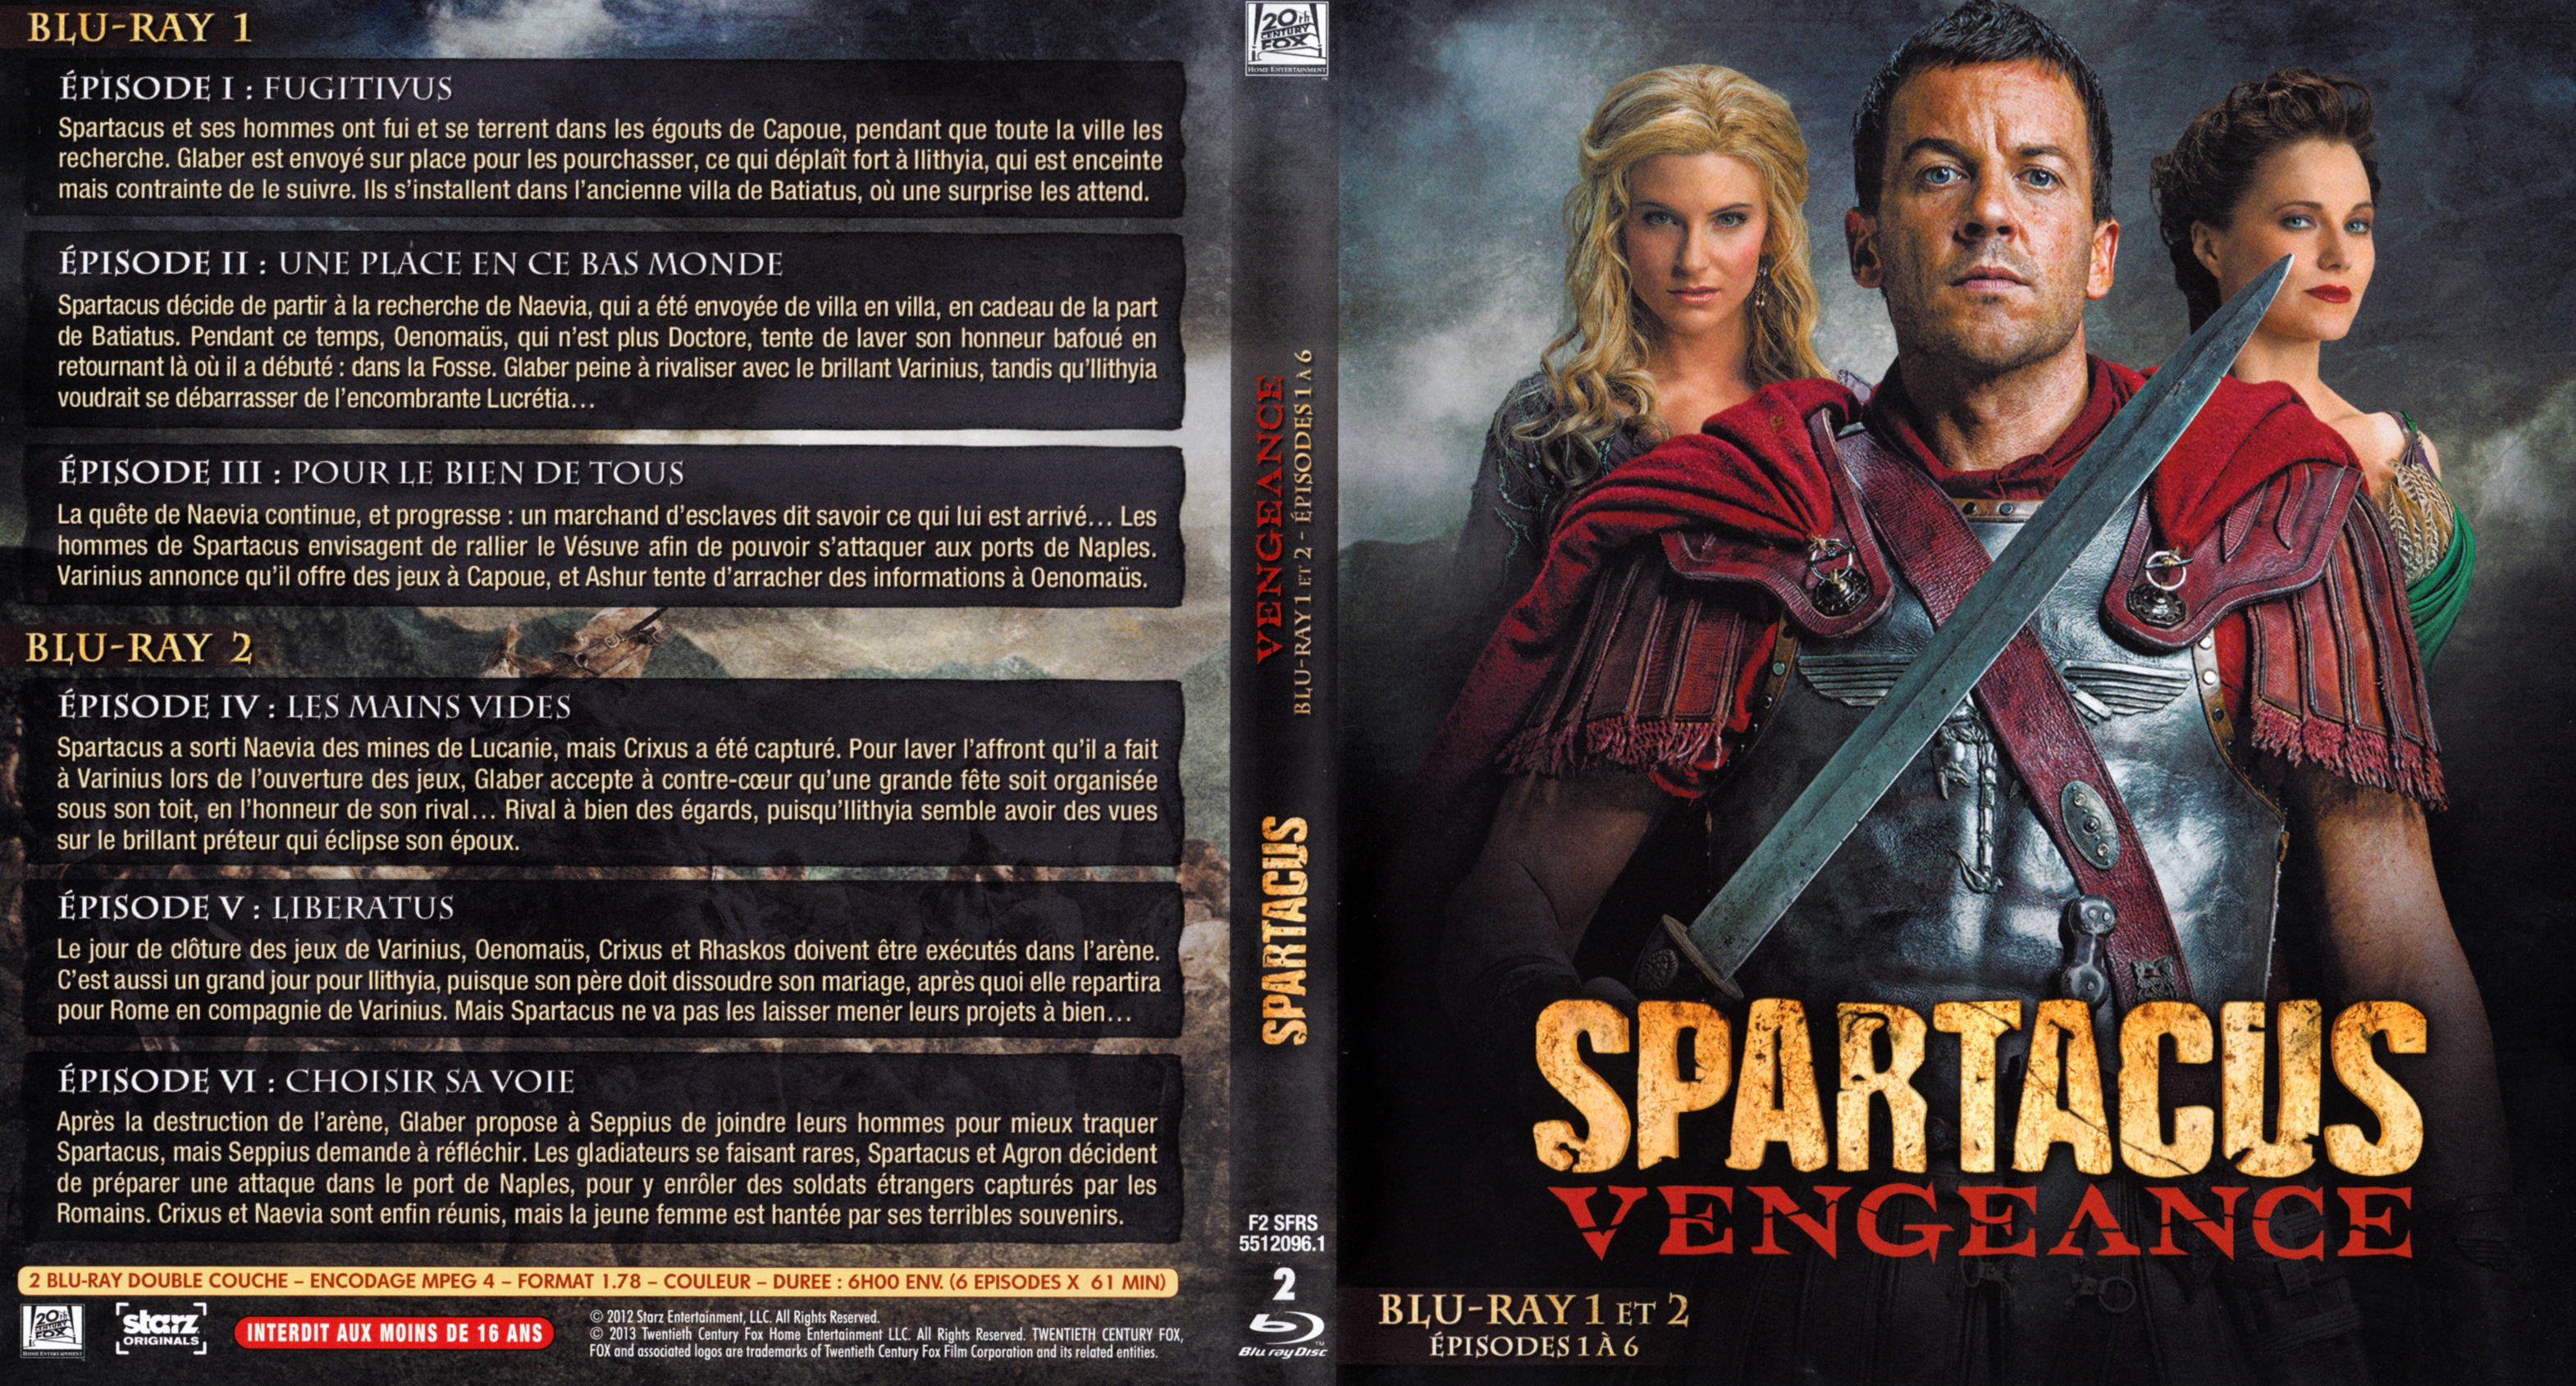 Jaquette DVD Spartacus vengeance Saison 2 DVD 1 (BLU-RAY)